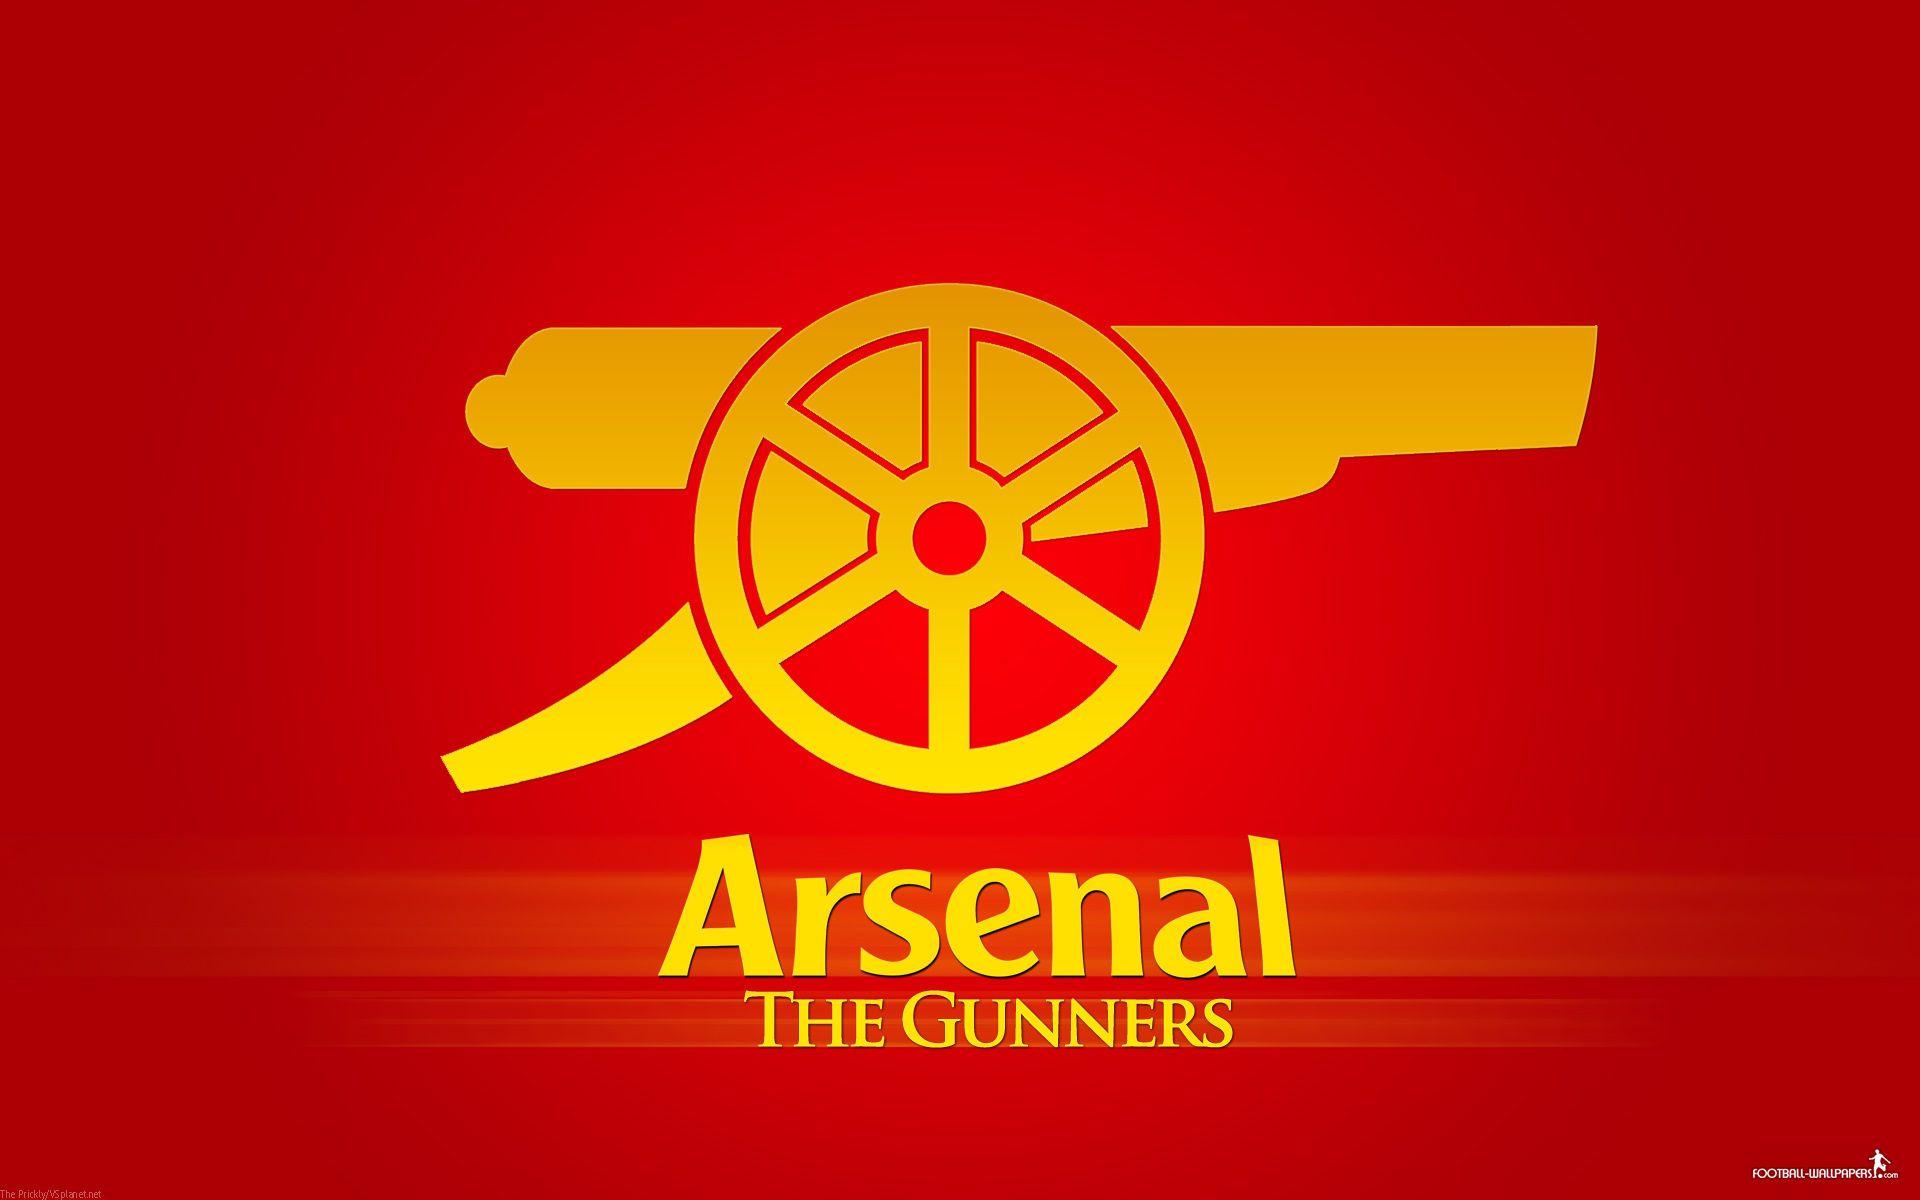 Cool Arsenal Fc Wallpaper: Players, Teams, Leagues Wallpaper